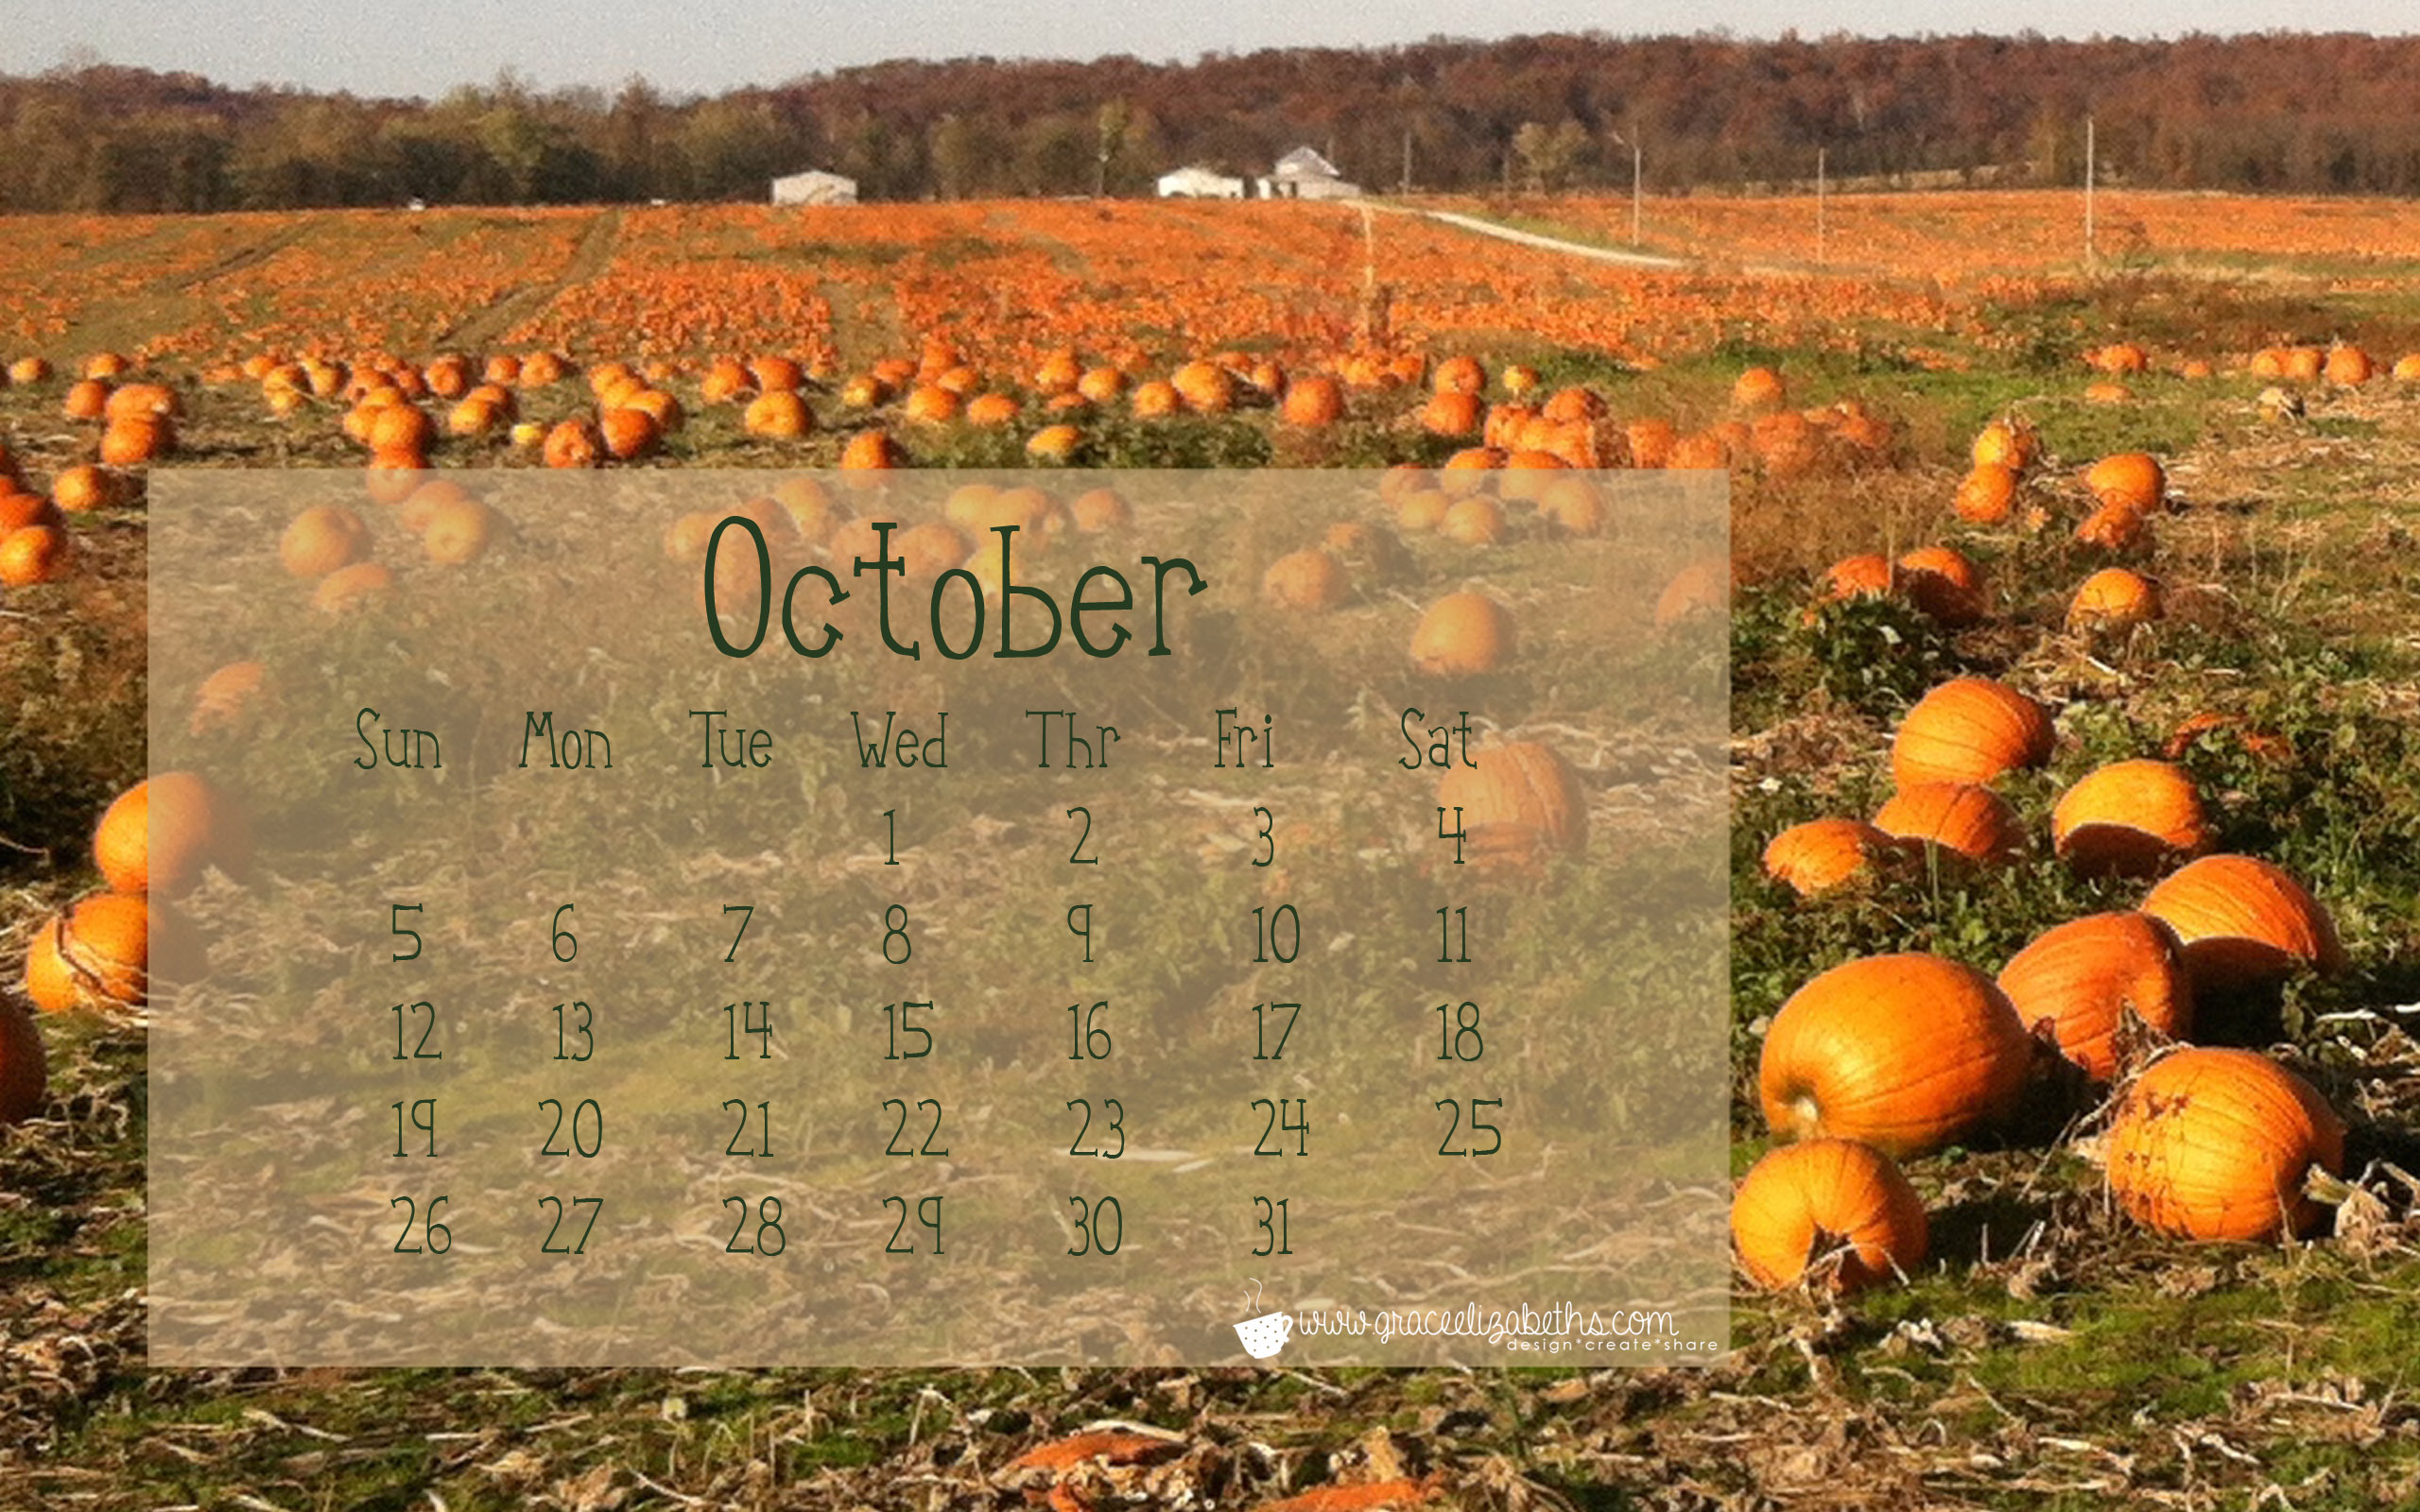 October Calendar by Grace Elizabeth #39 s Grace Elizabeth #39 s